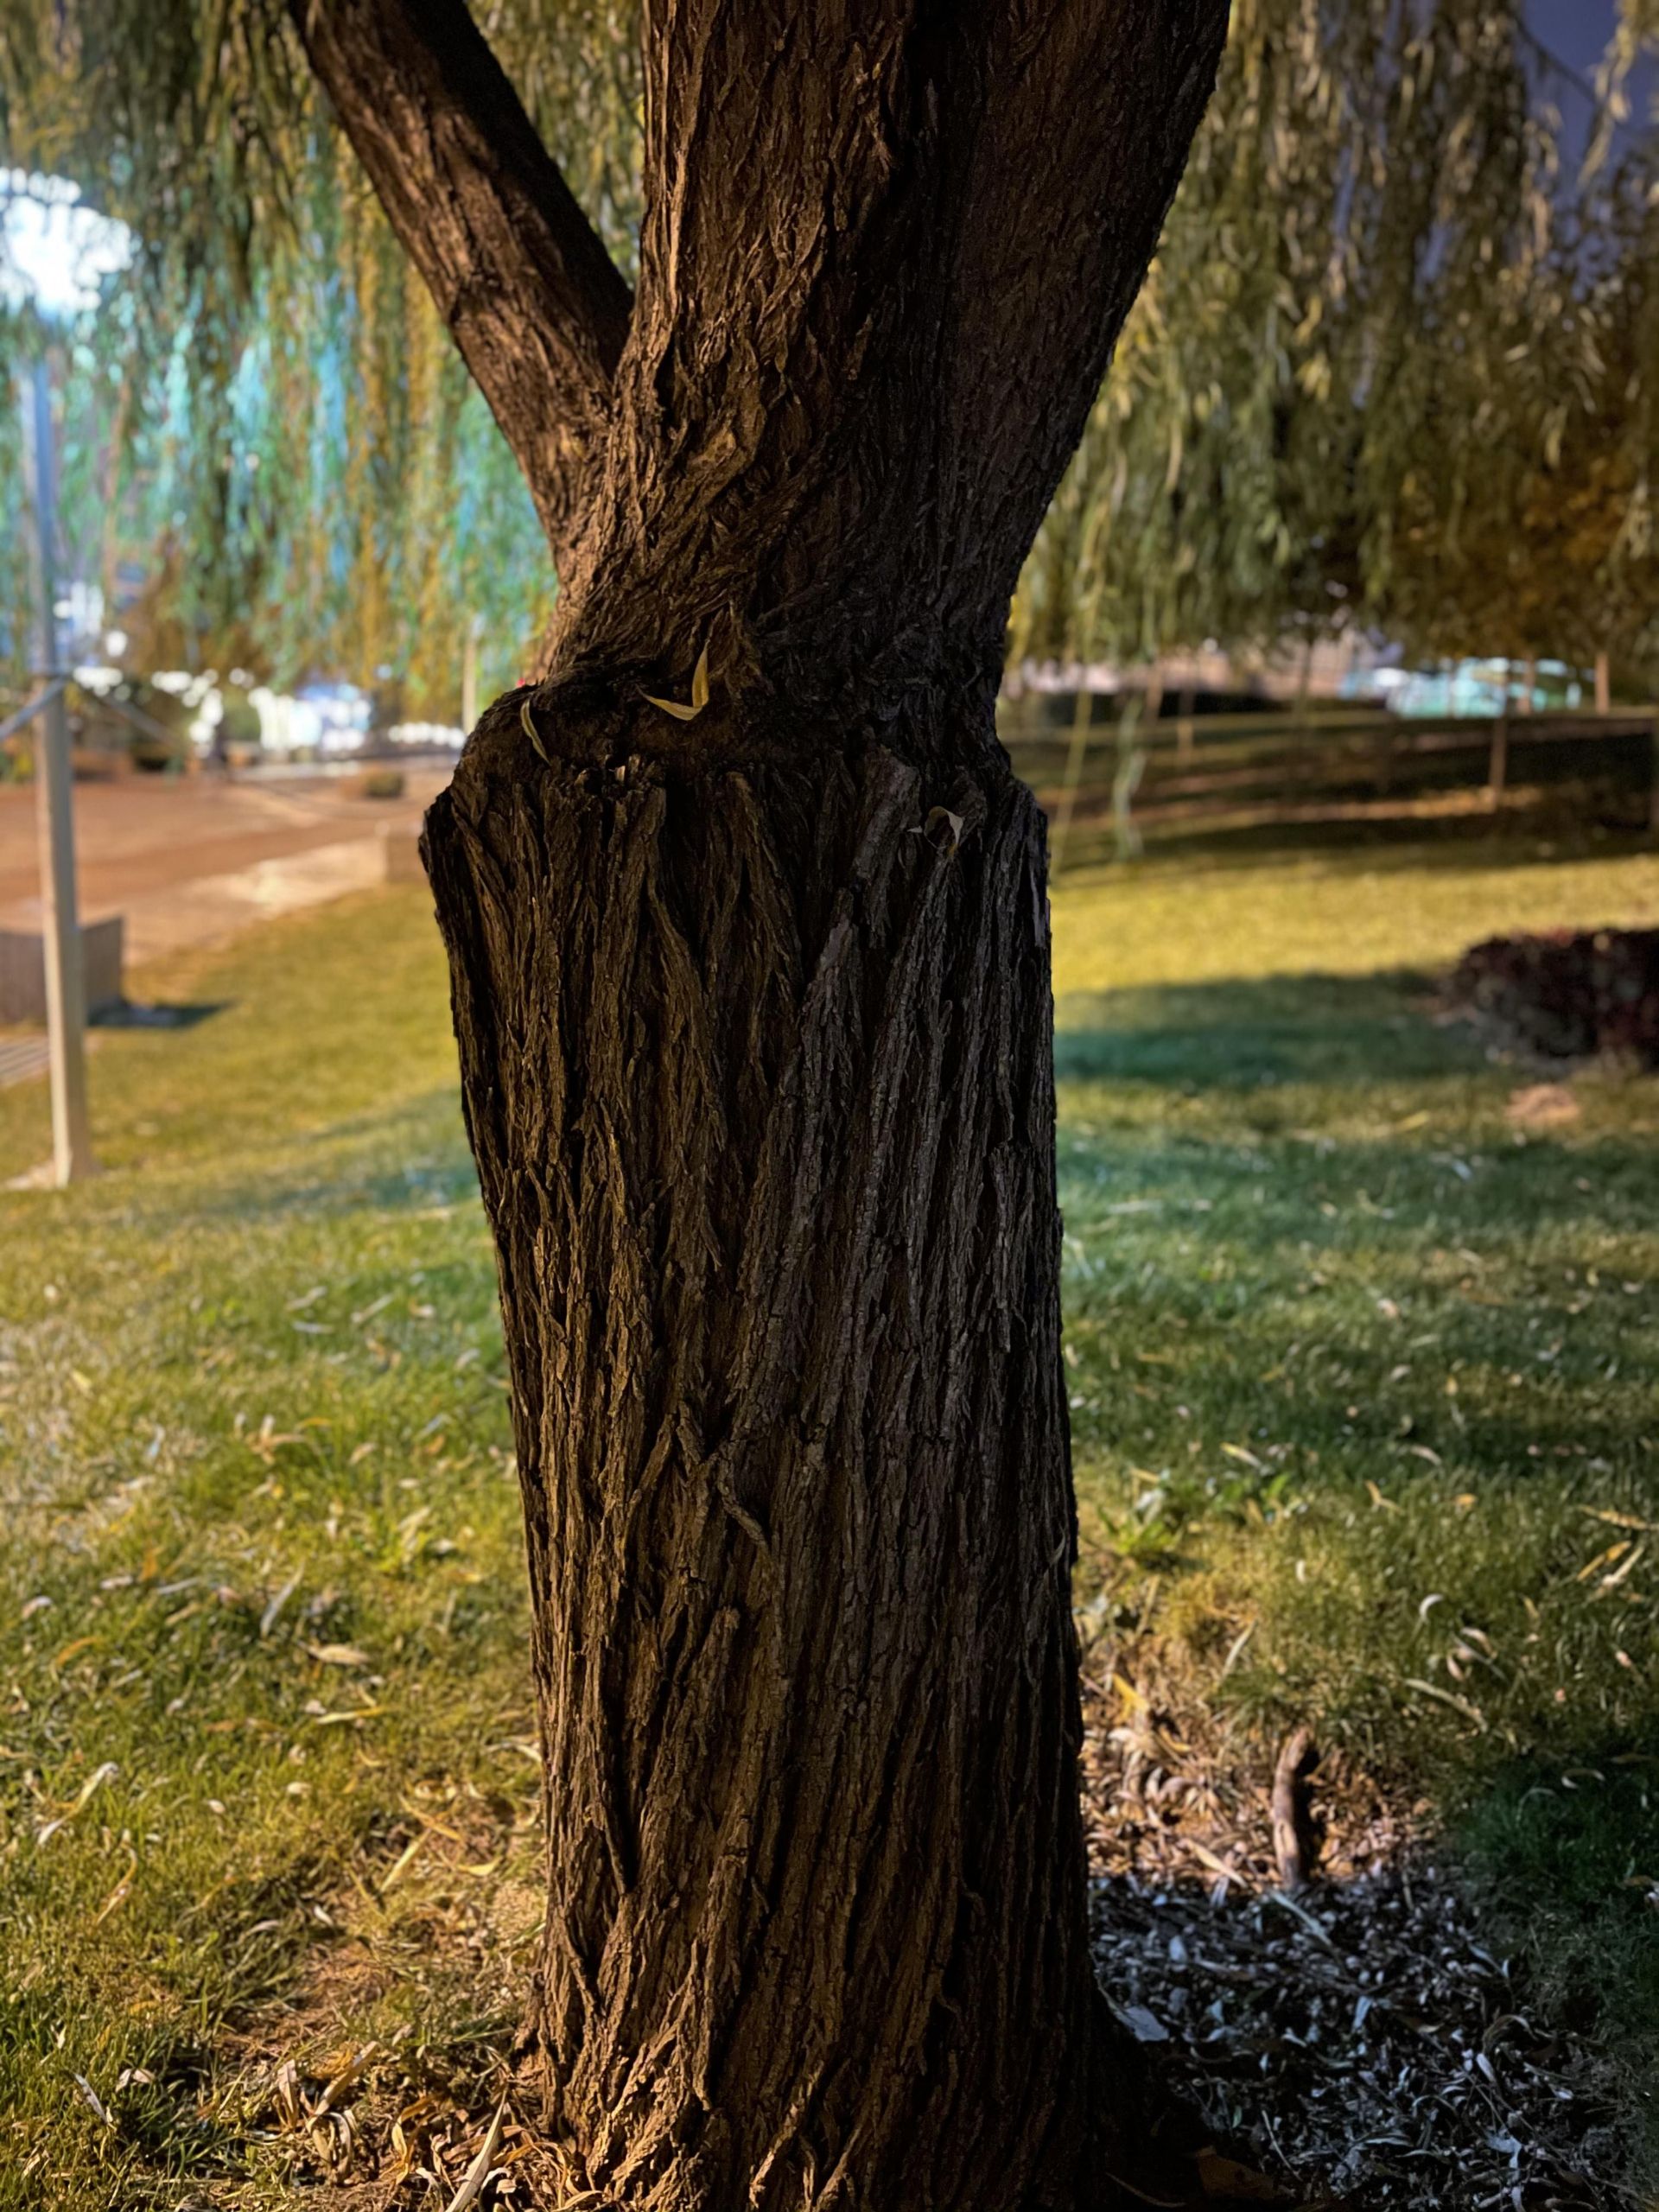 نمونه عکس پرتره آیفون ۱۲ پرو اپل - تنه درخت در پارک آب و آتش تهران